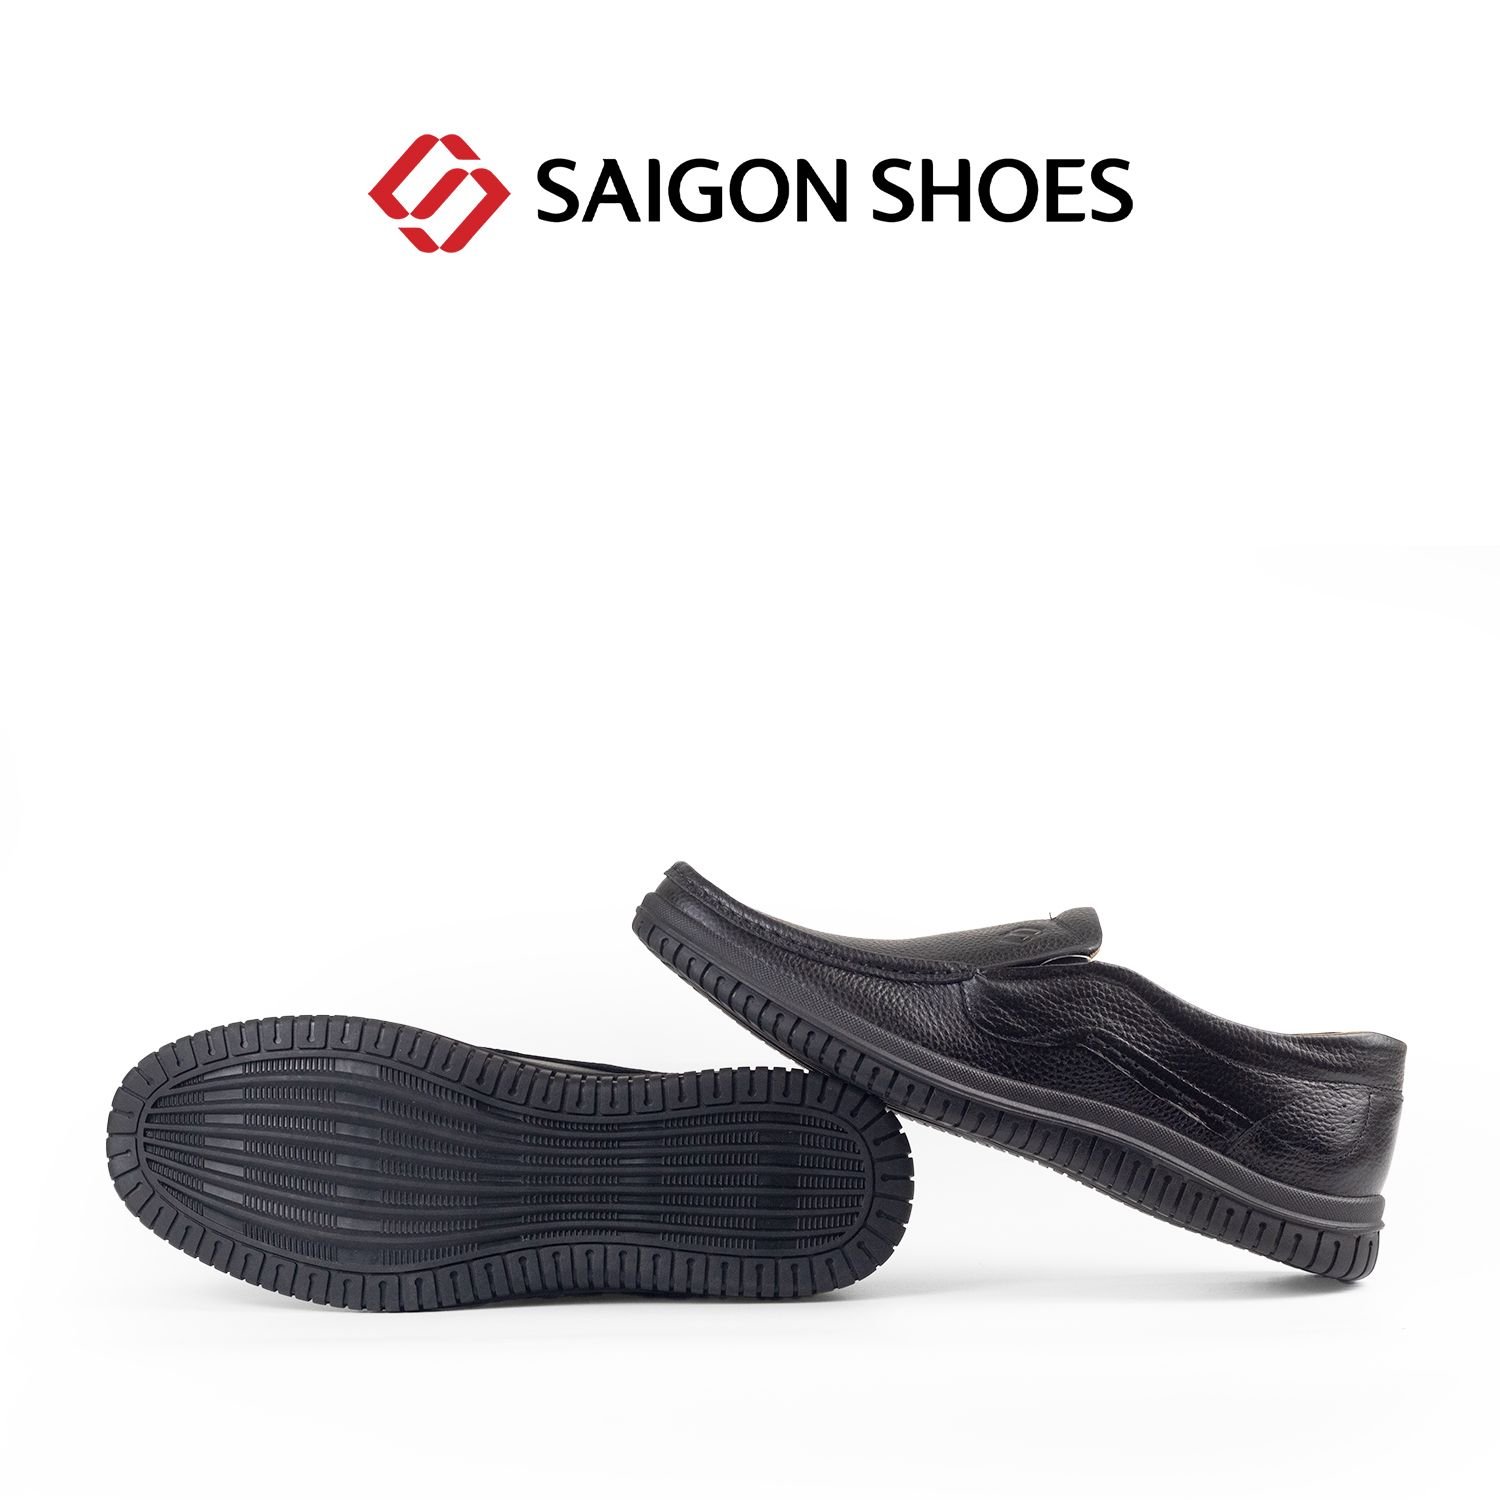 Pierre Cardin Paris Vietnam: Giày Mọi Saigon Shoes - SGMFWLH 007 (BLACK)